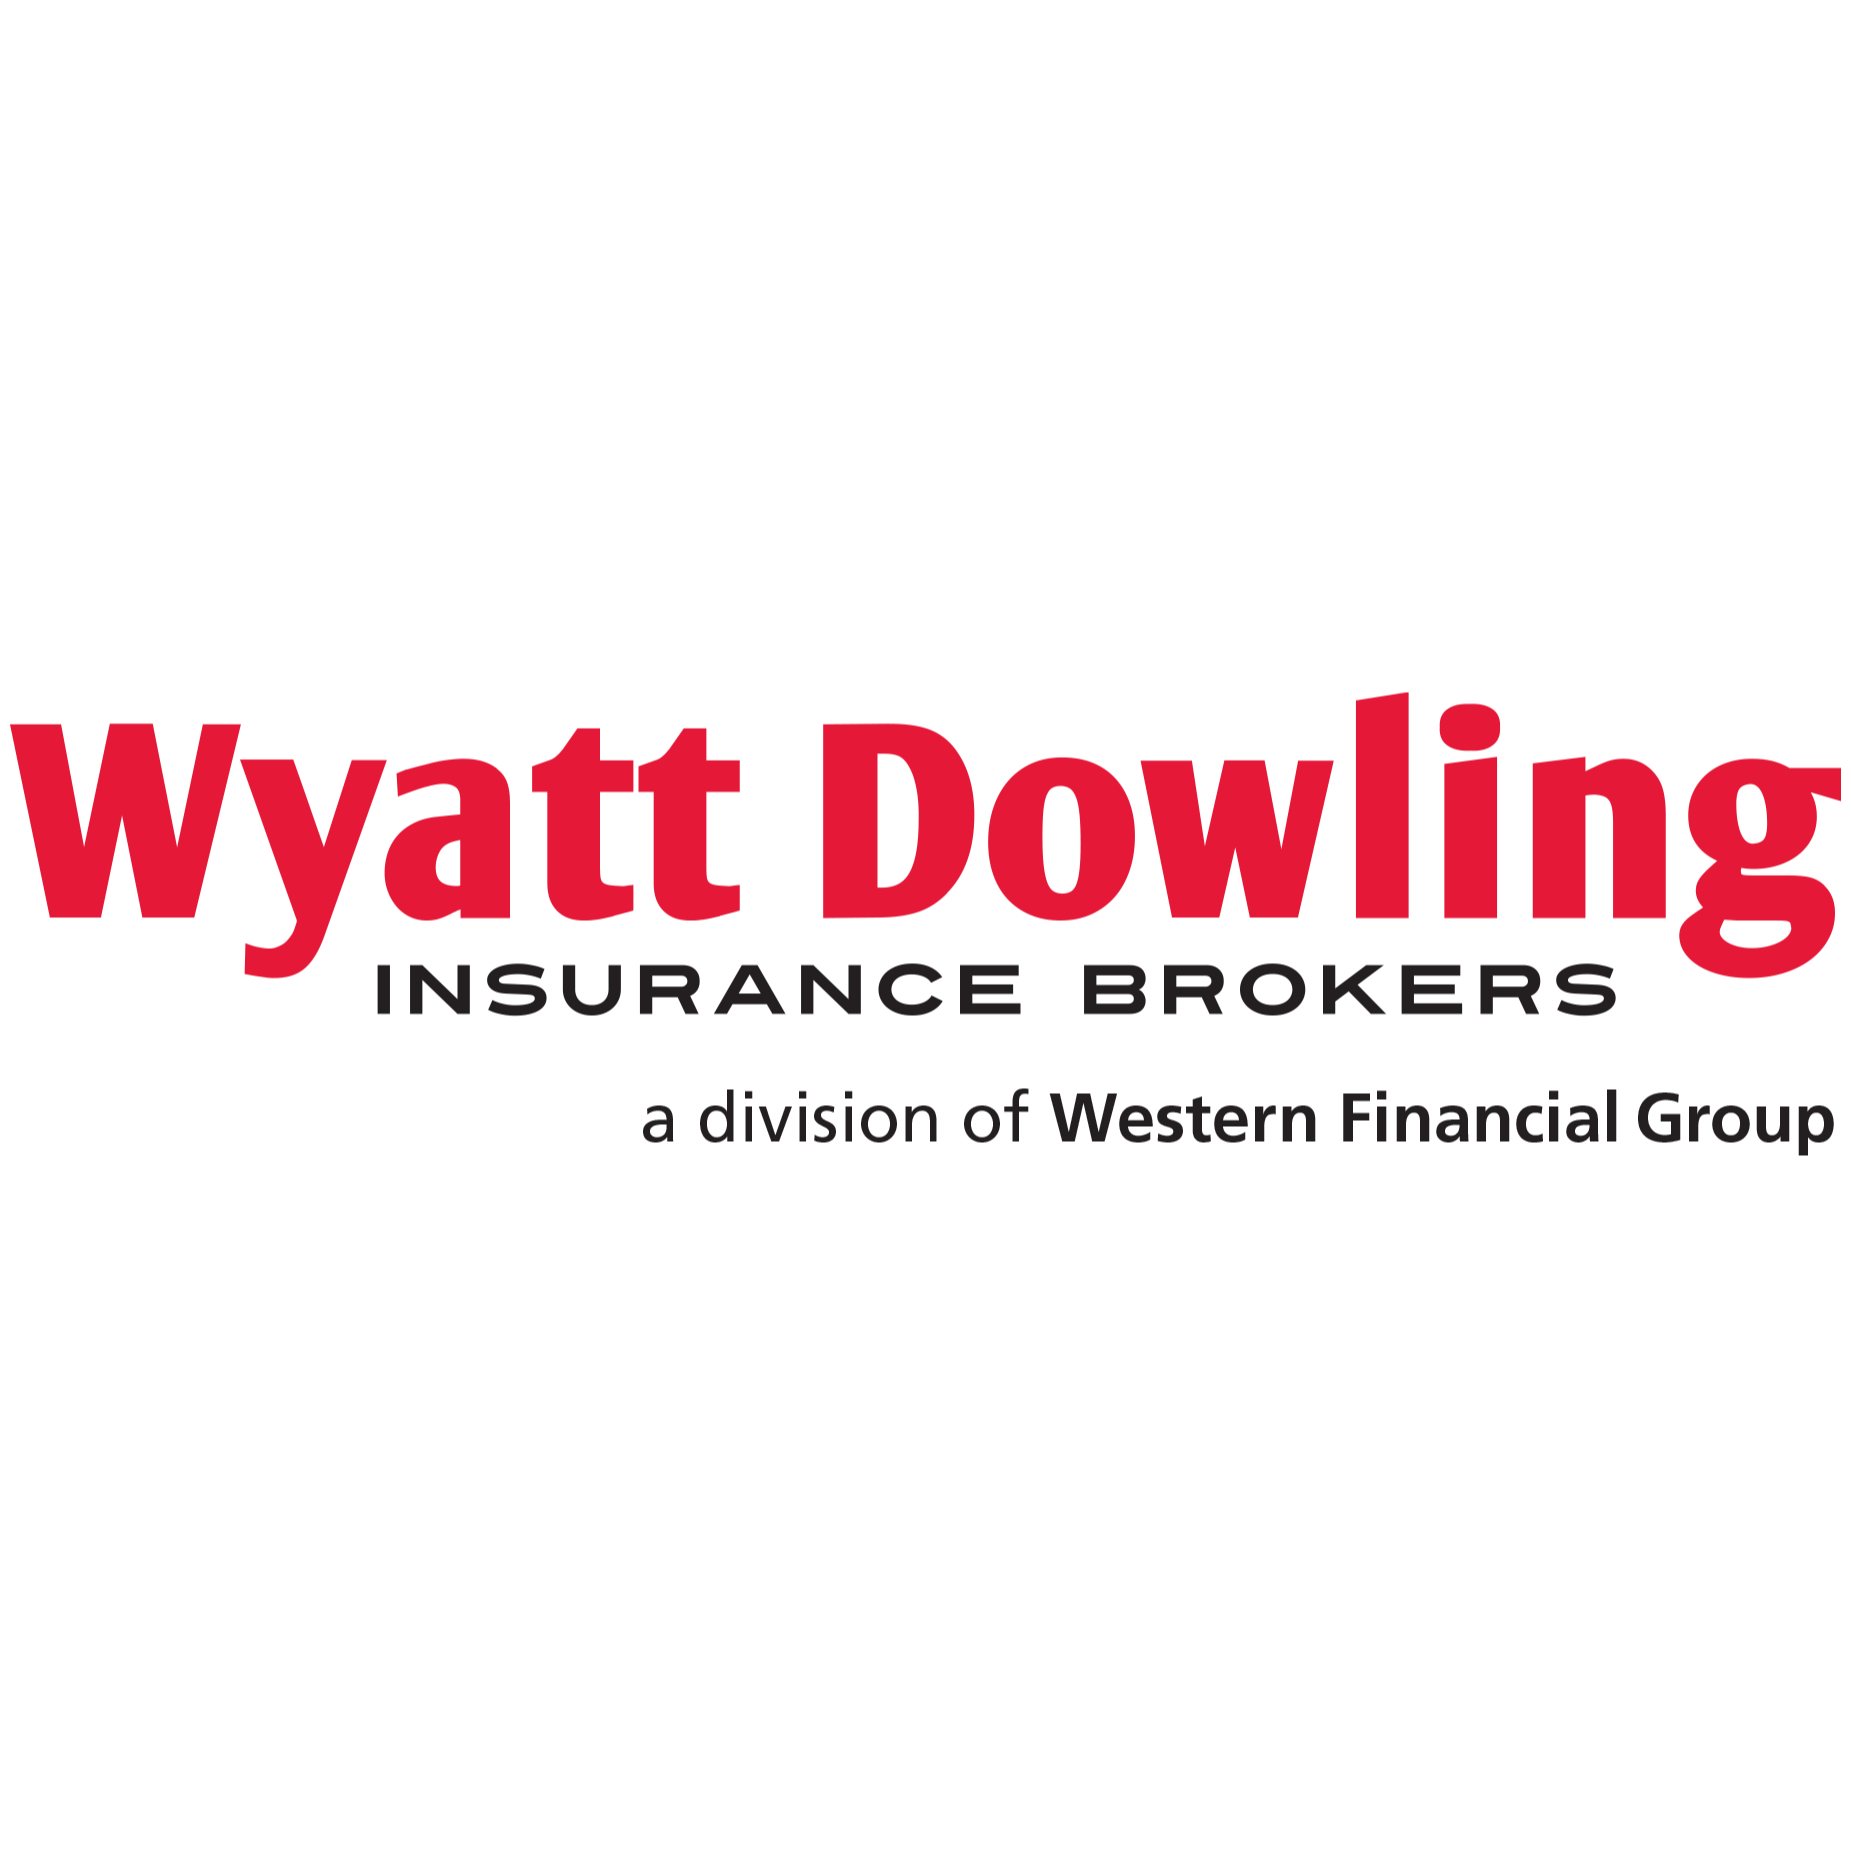 Wyatt Dowling Insurance Brokers - Insurance Brokers